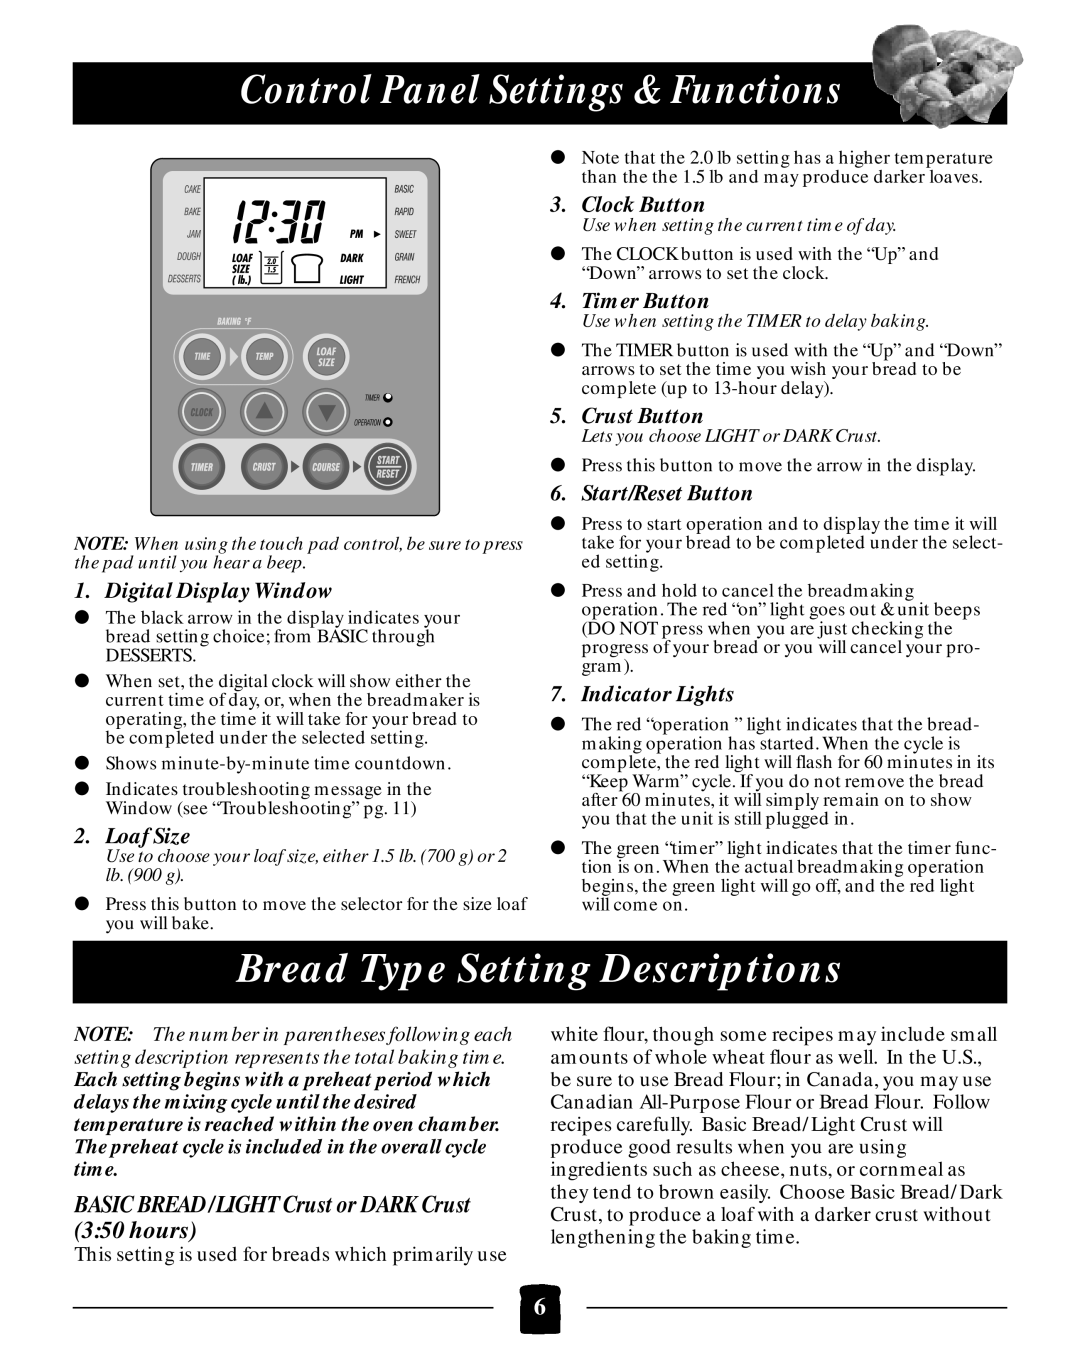 Black & Decker B2005 manual Control Panel Settings & Functions, Bread Type Setting Descriptions, Digital Display Window 